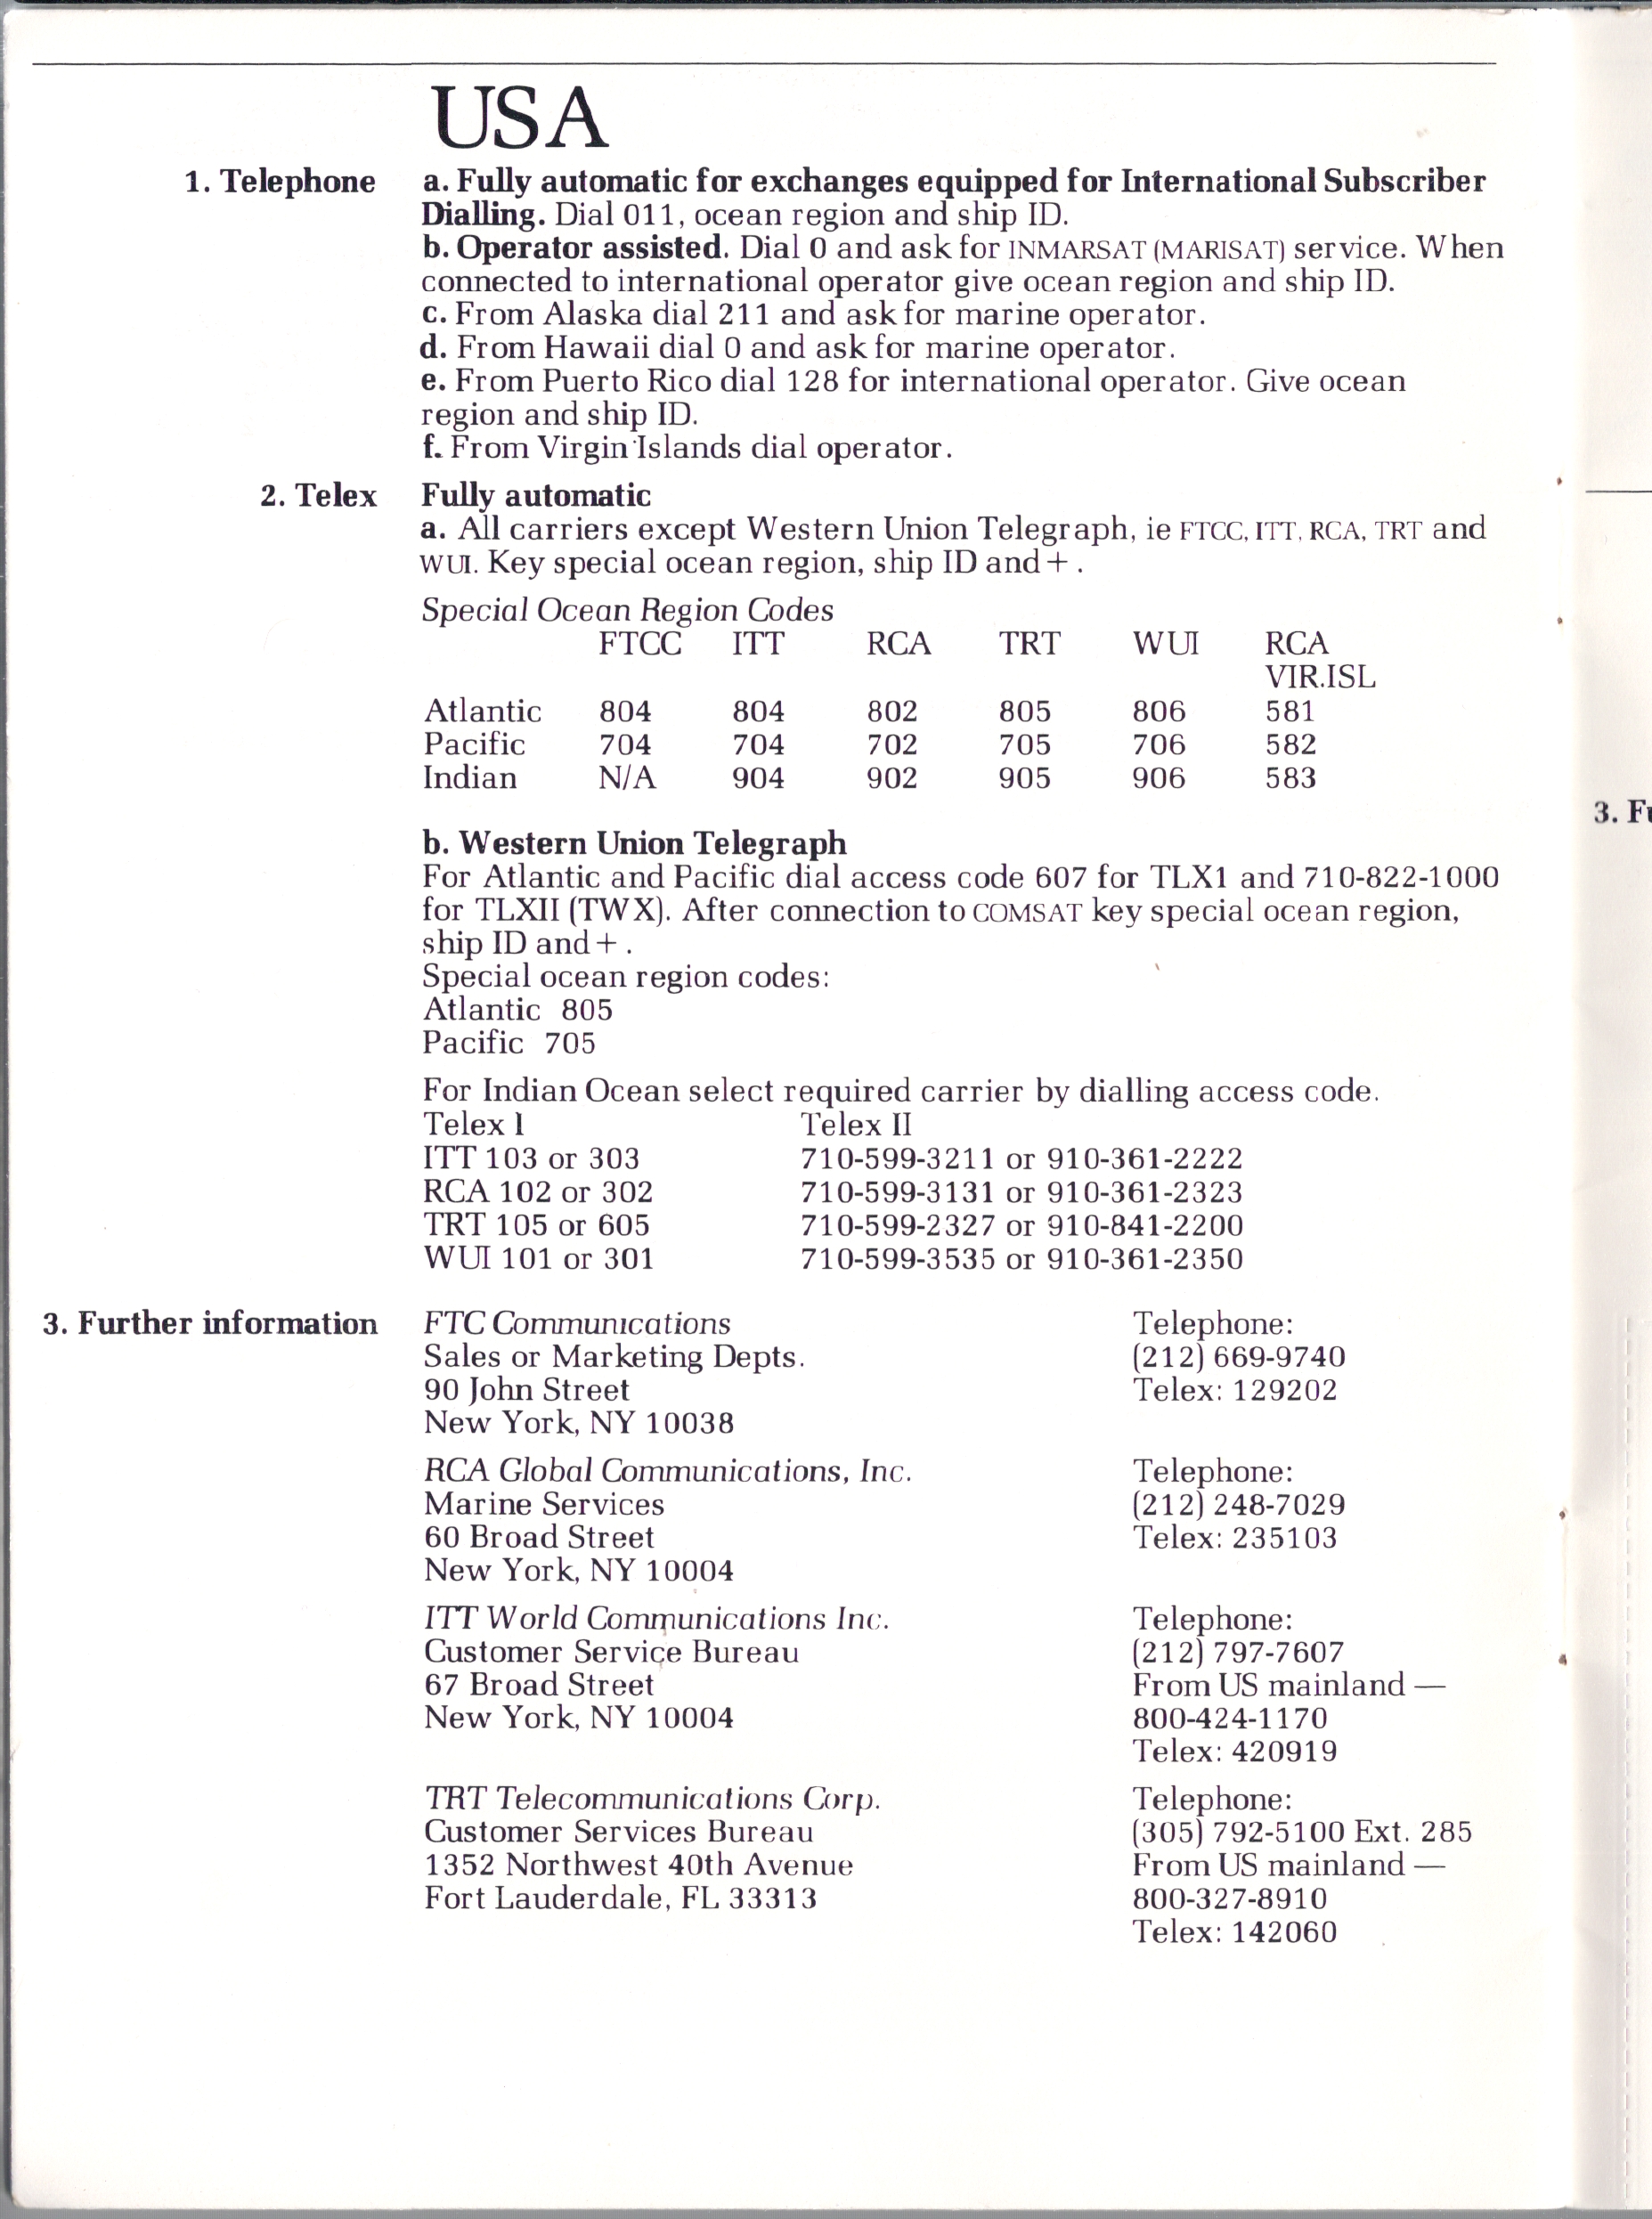 SHORE-TO-SHIP CALLING PROCEDURES 1982_15.JPG